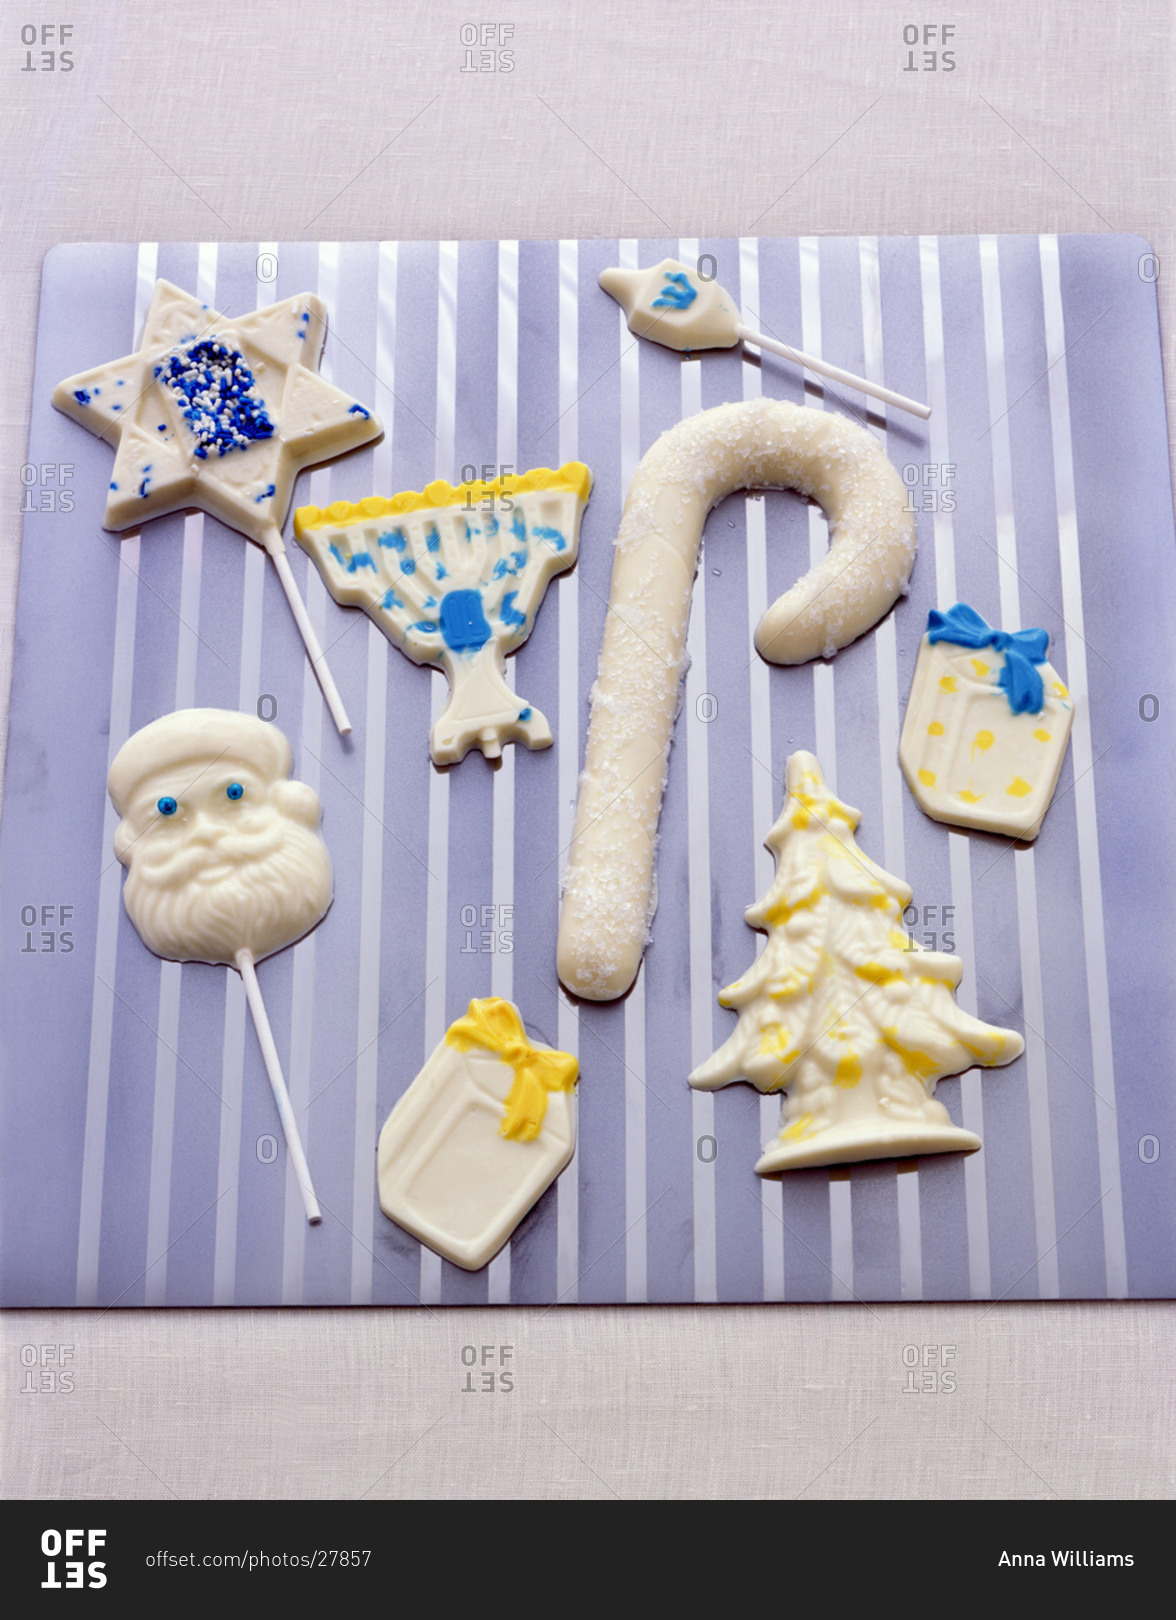 Handmade white chocolate candies symbolizing the holiday season